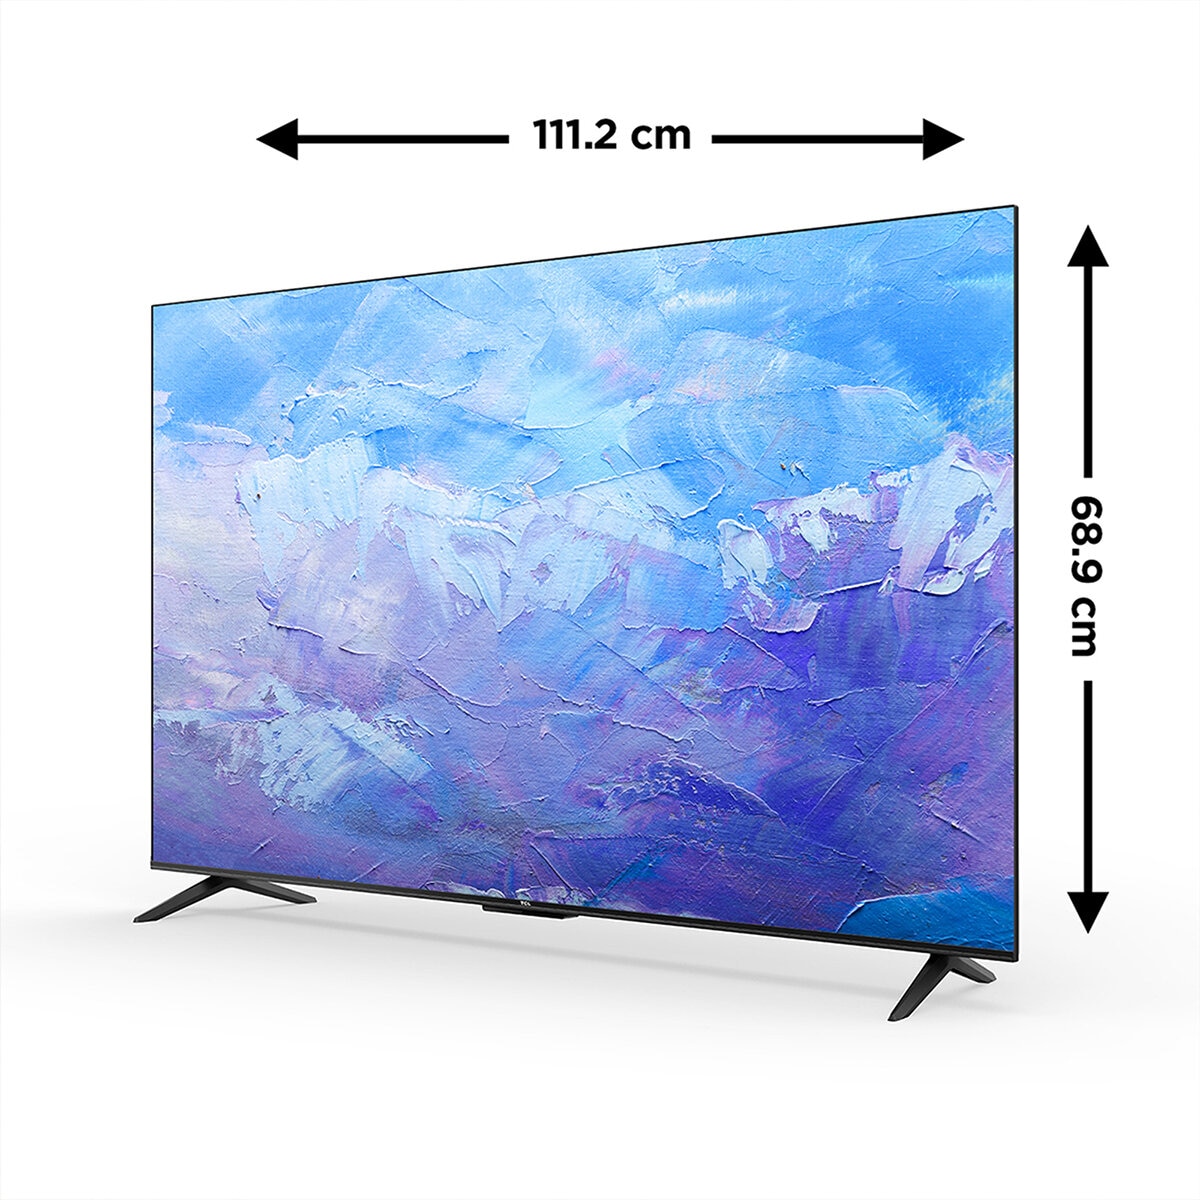 Pantalla JVC 50 Pulgadas UHD 4K Smart TV Roku a precio de socio